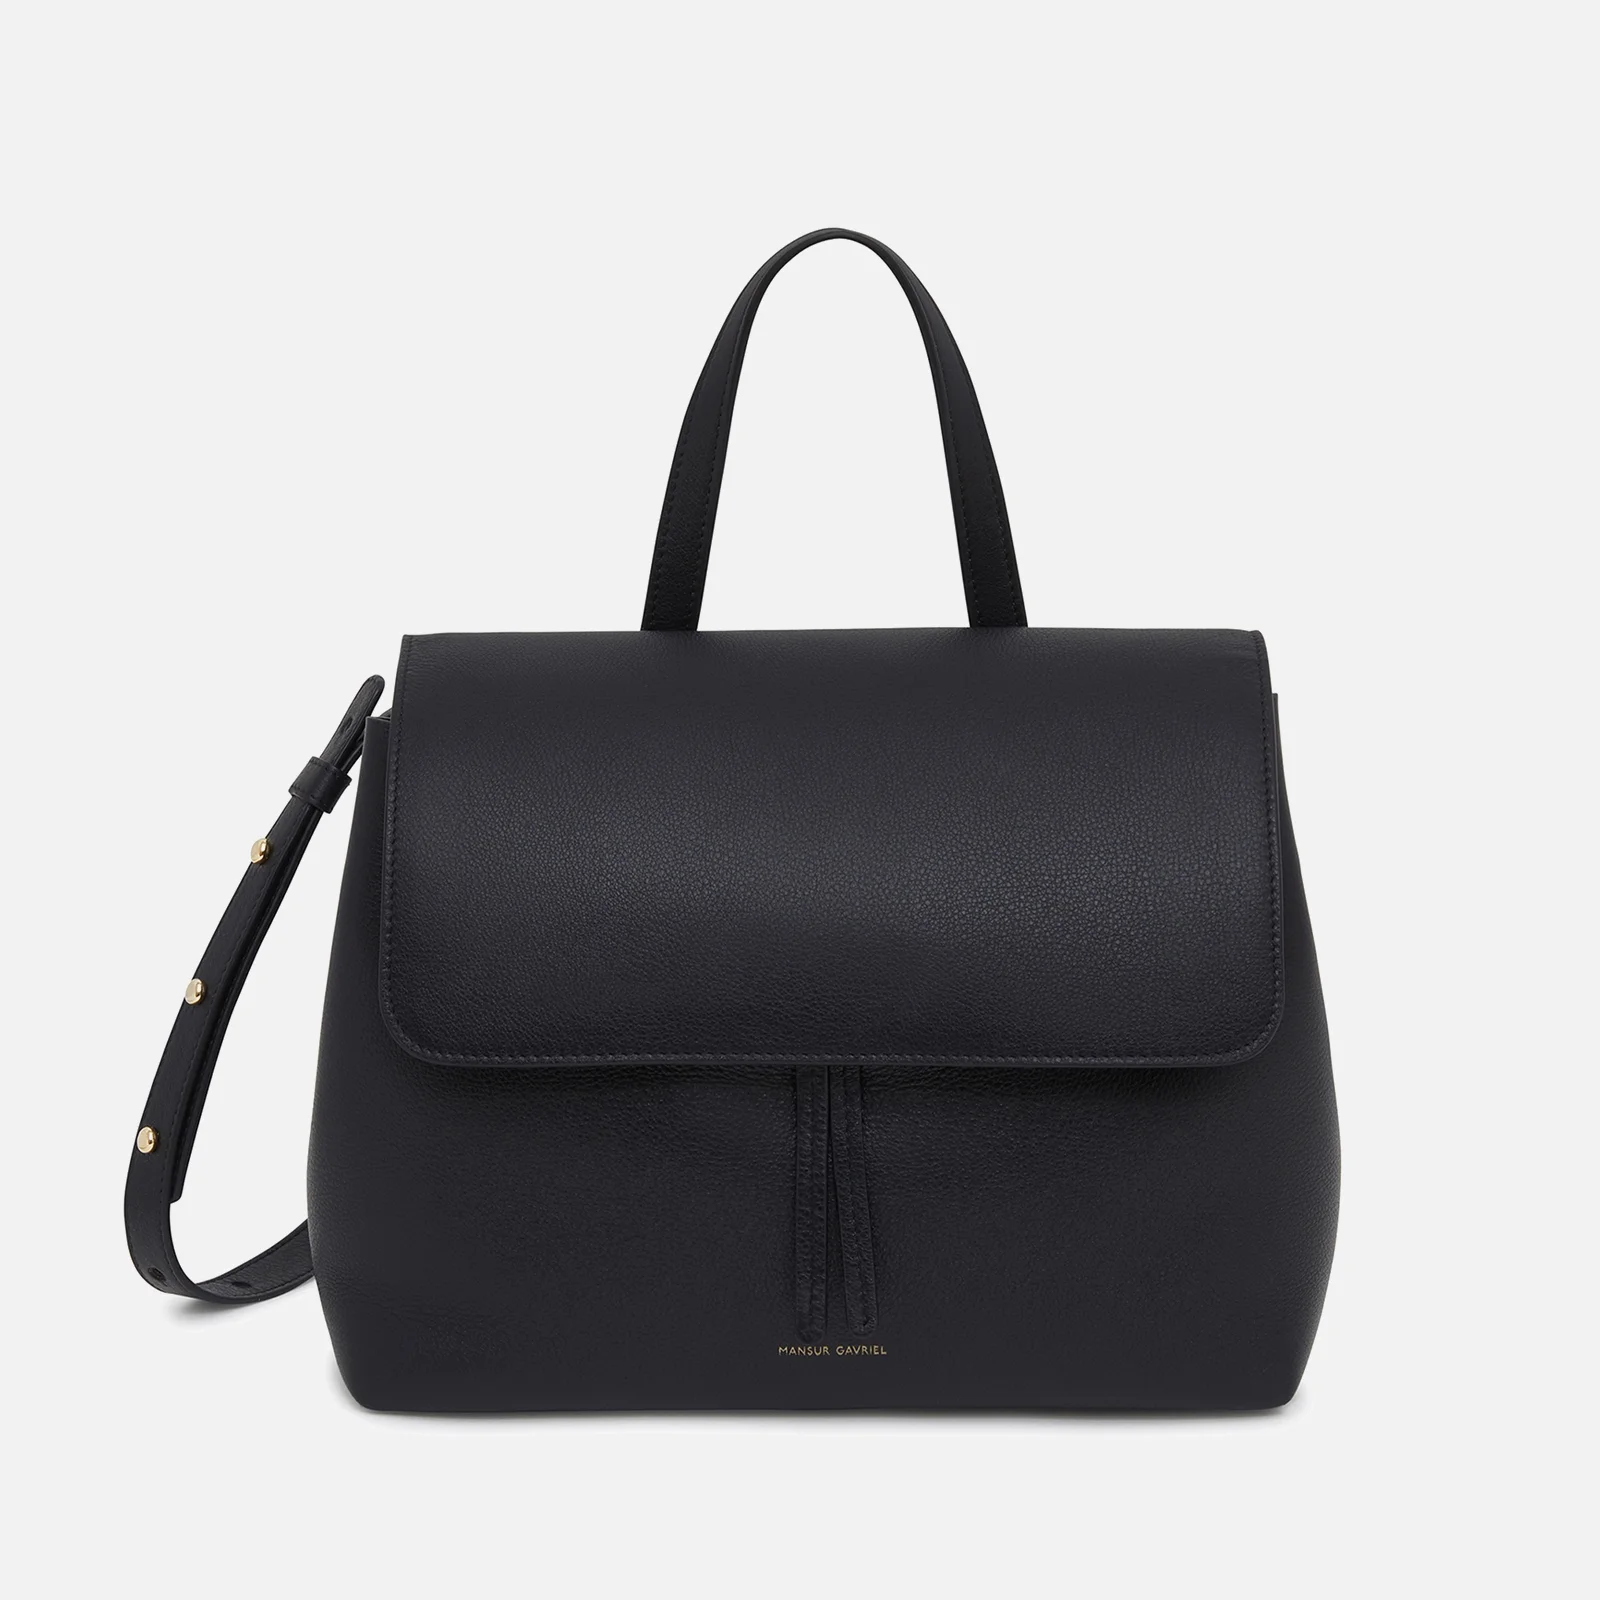 Mansur Gavriel Mini Soft Lady Leather Bag Image 1